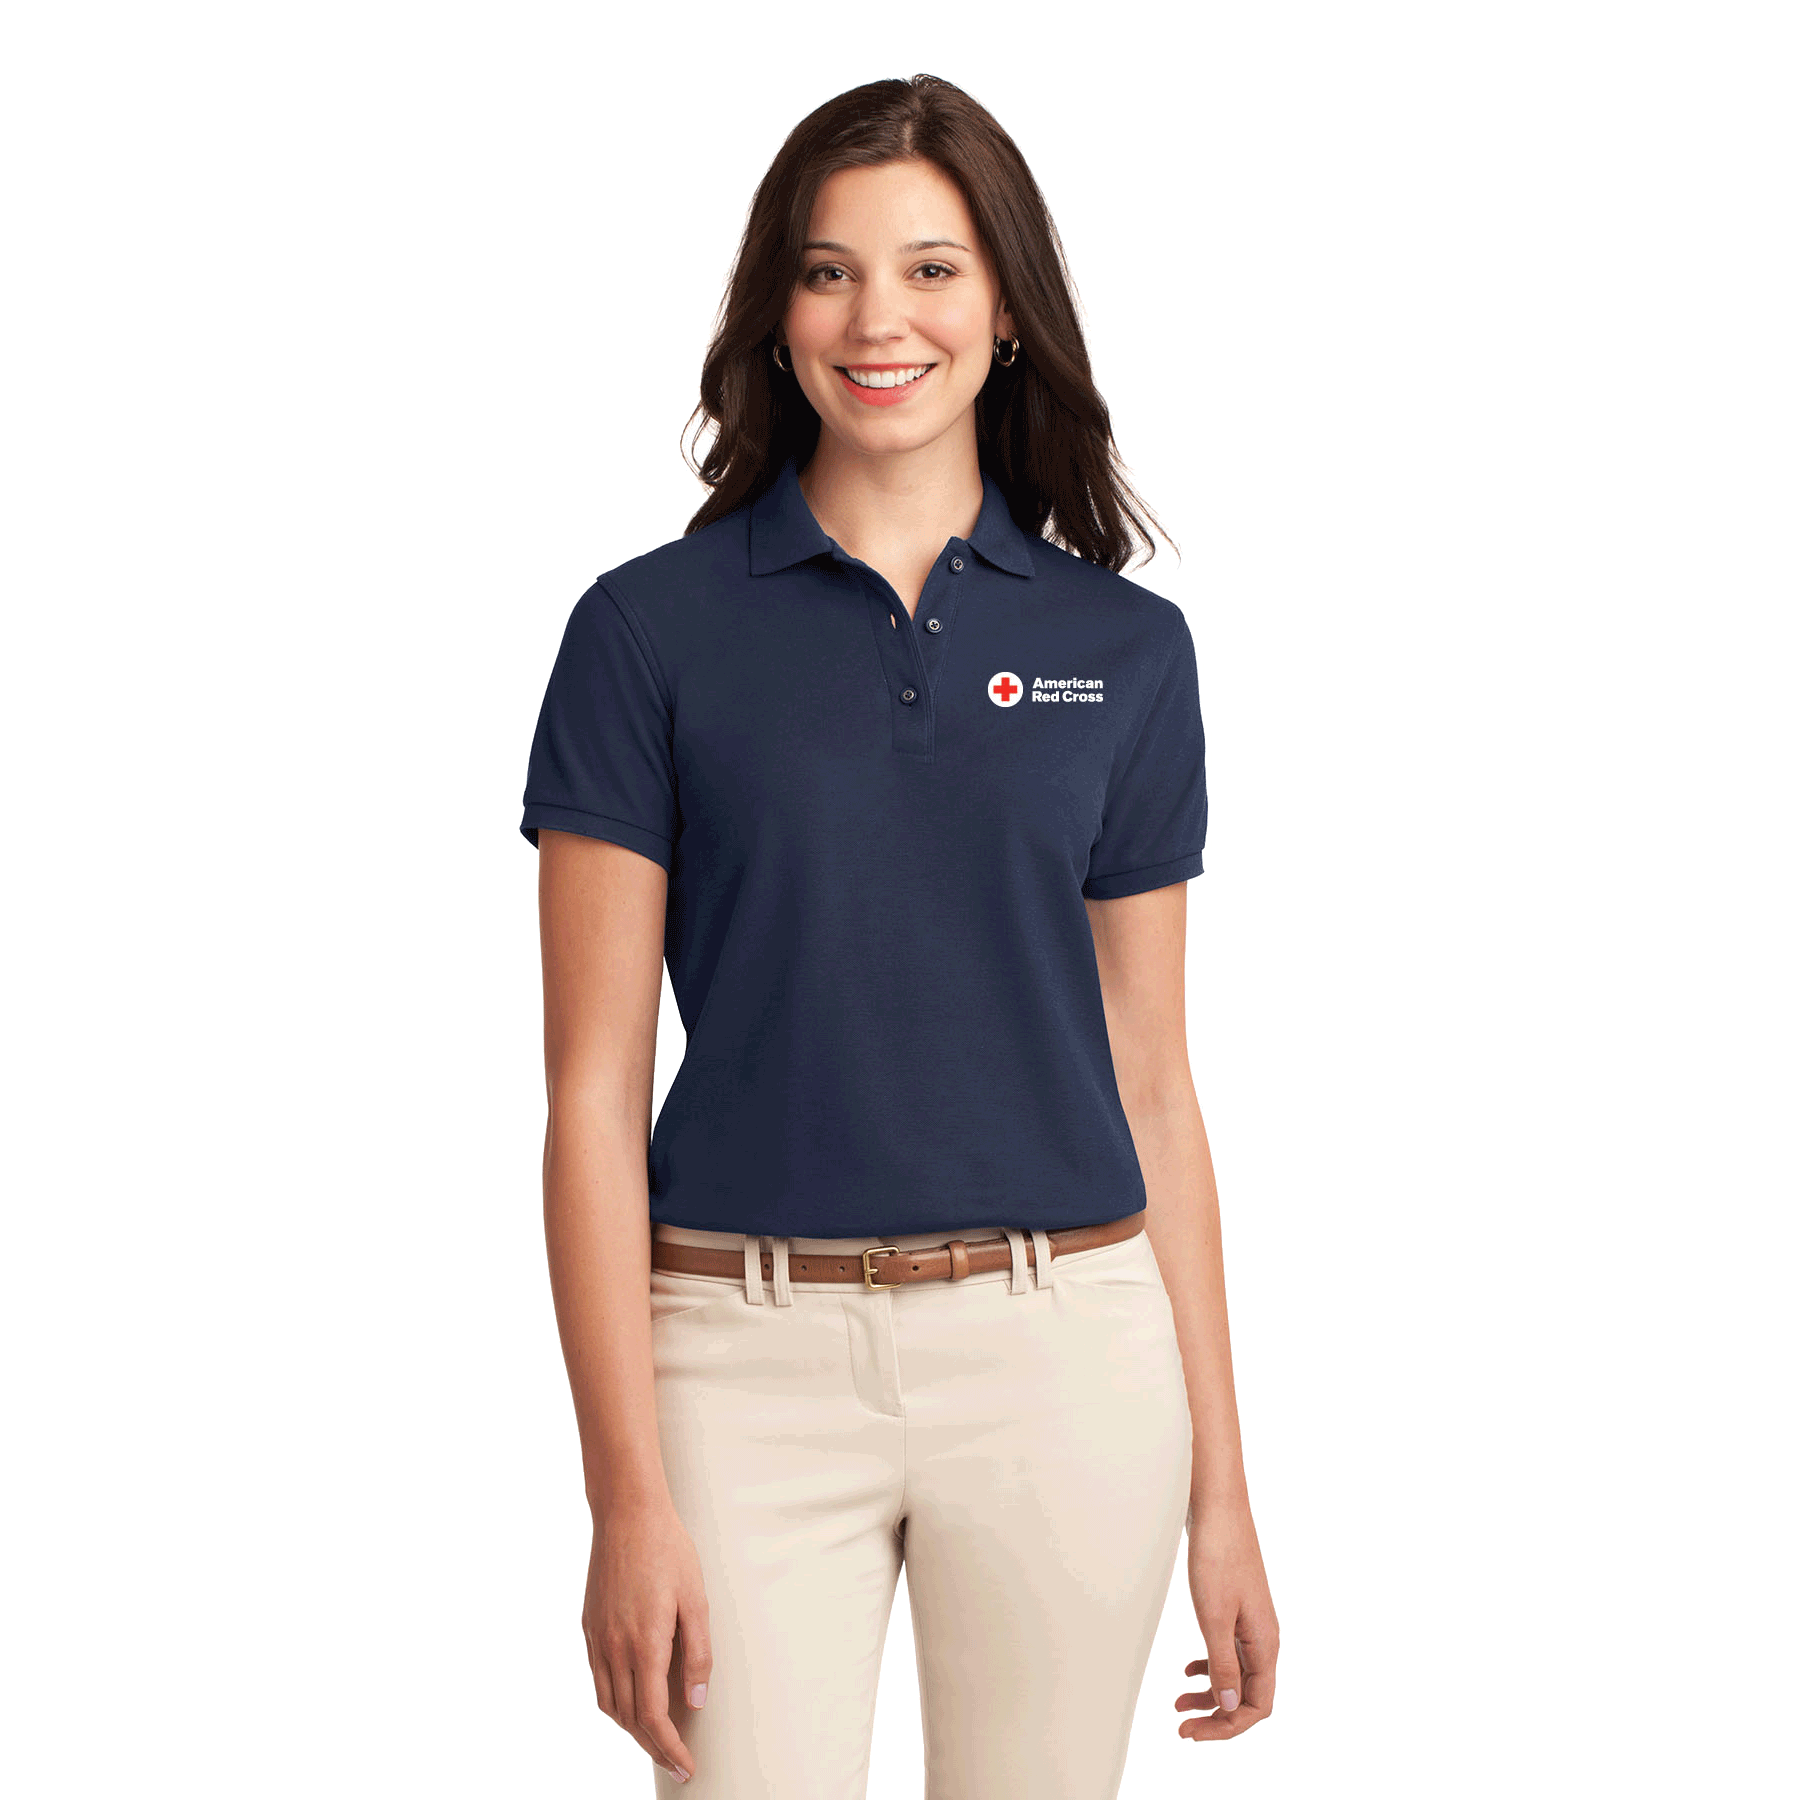 Women's Cotton Polo Shirt | Red Cross Store